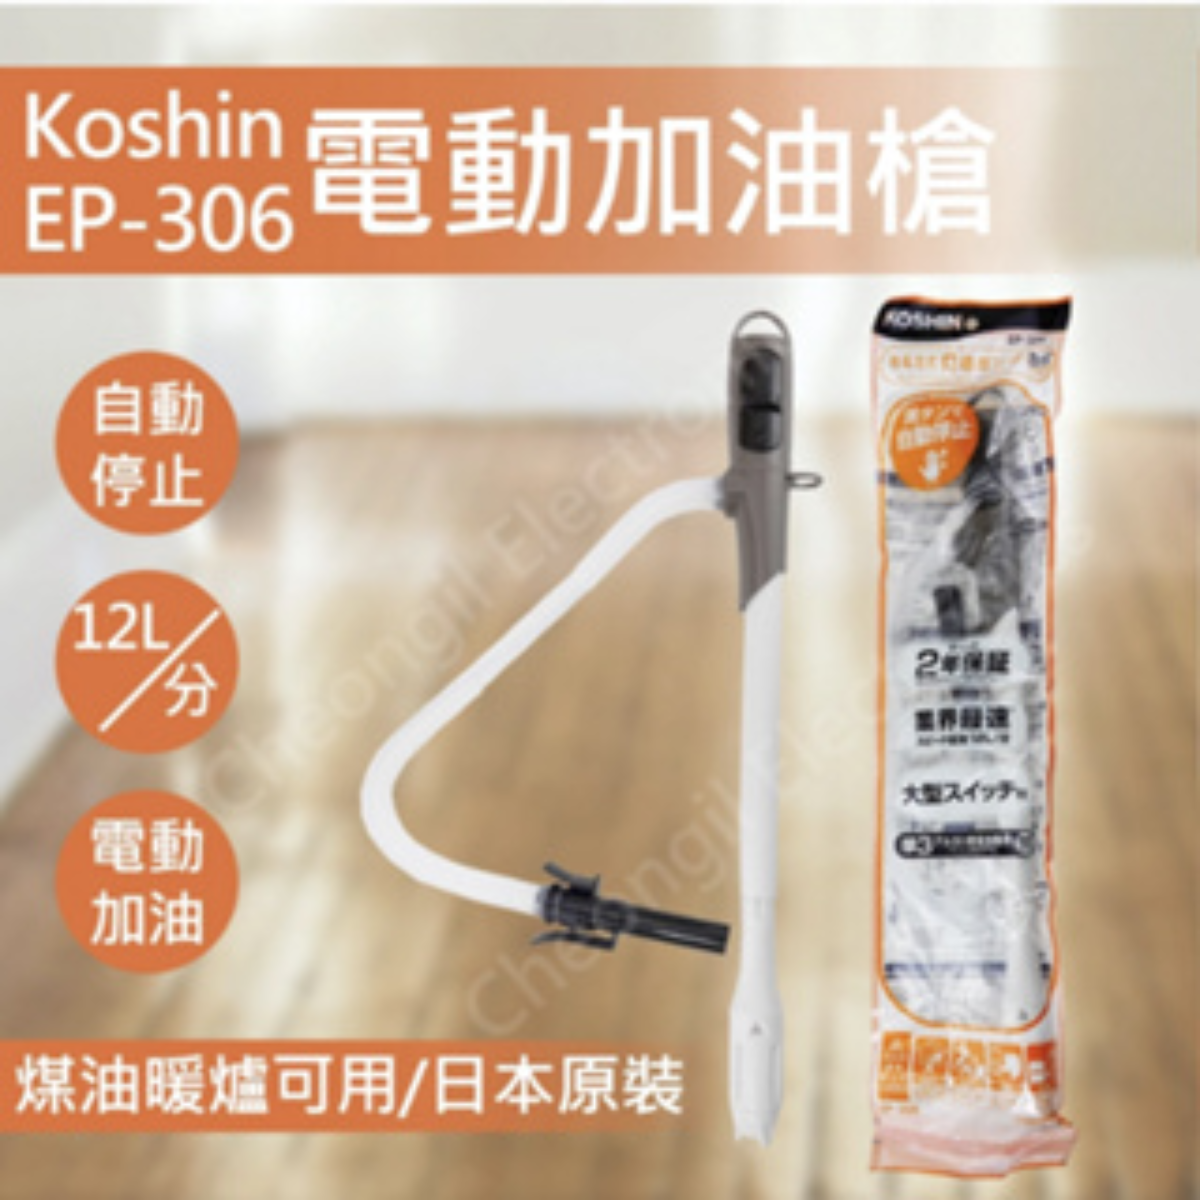 KOSHIN【EP-306】煤油暖爐電動加油槍 